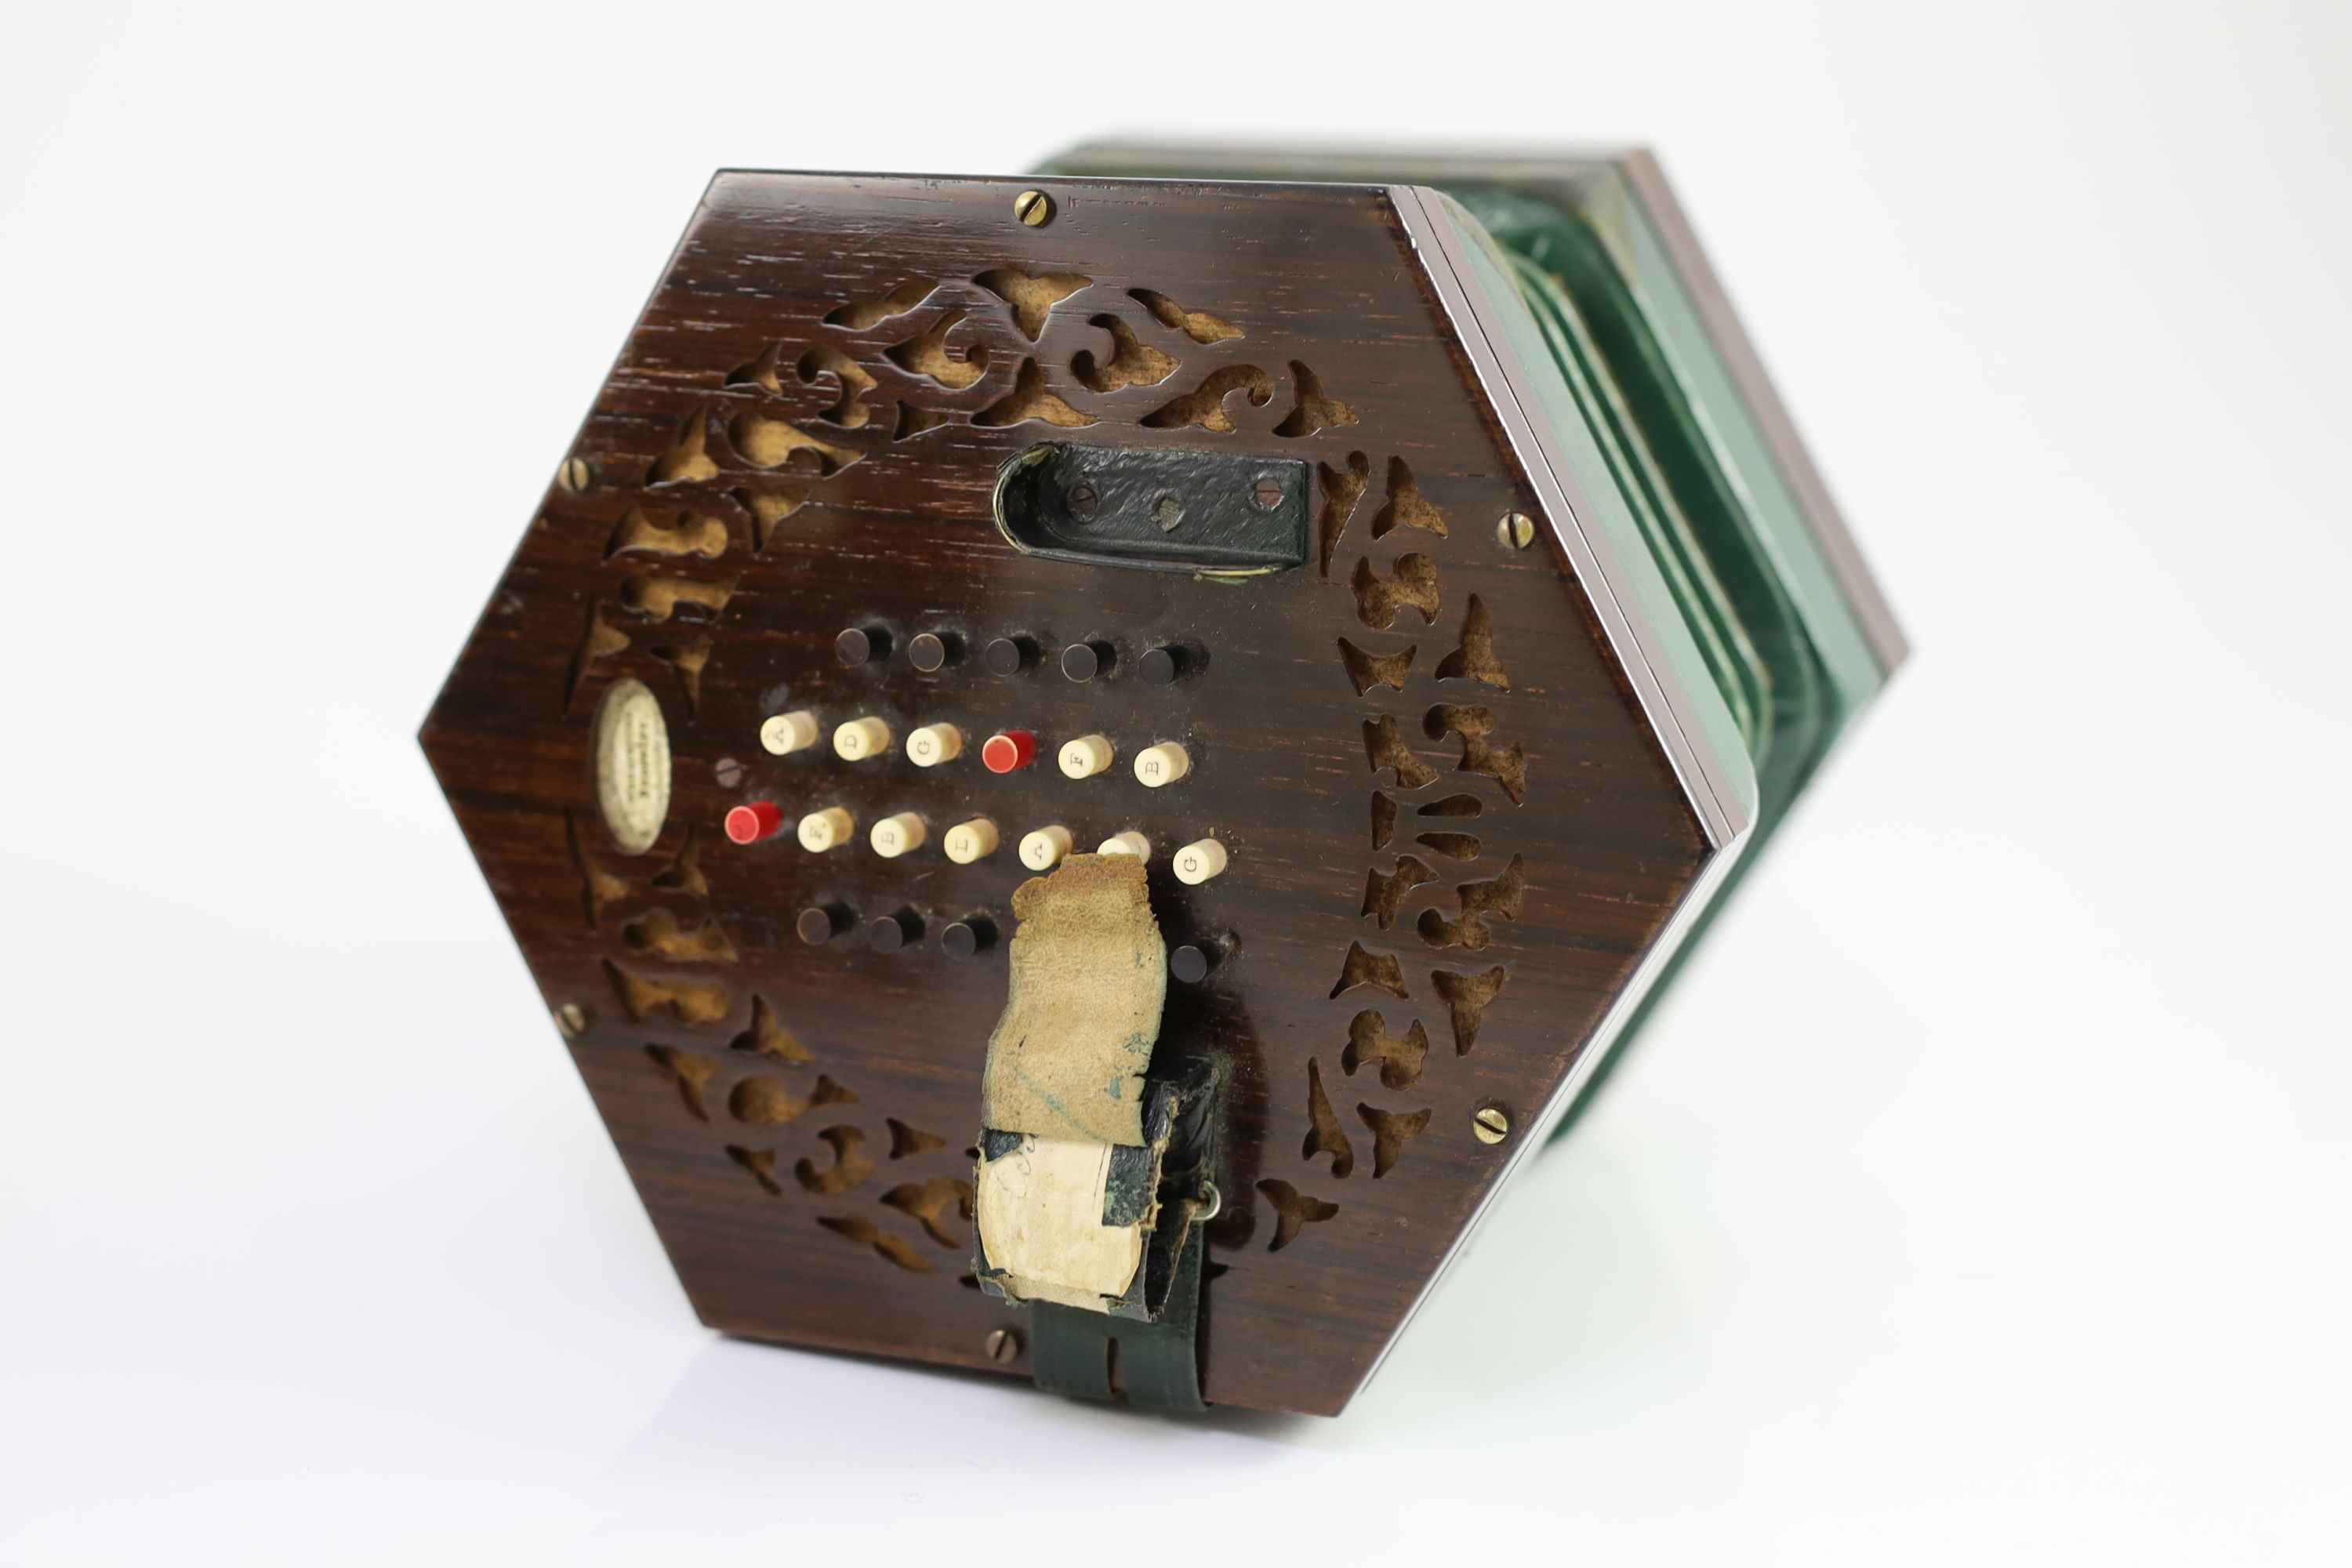 A 48-key C. Wheatstone English model rosewood concertina, diameter 18cm, housed in the original rosewood case